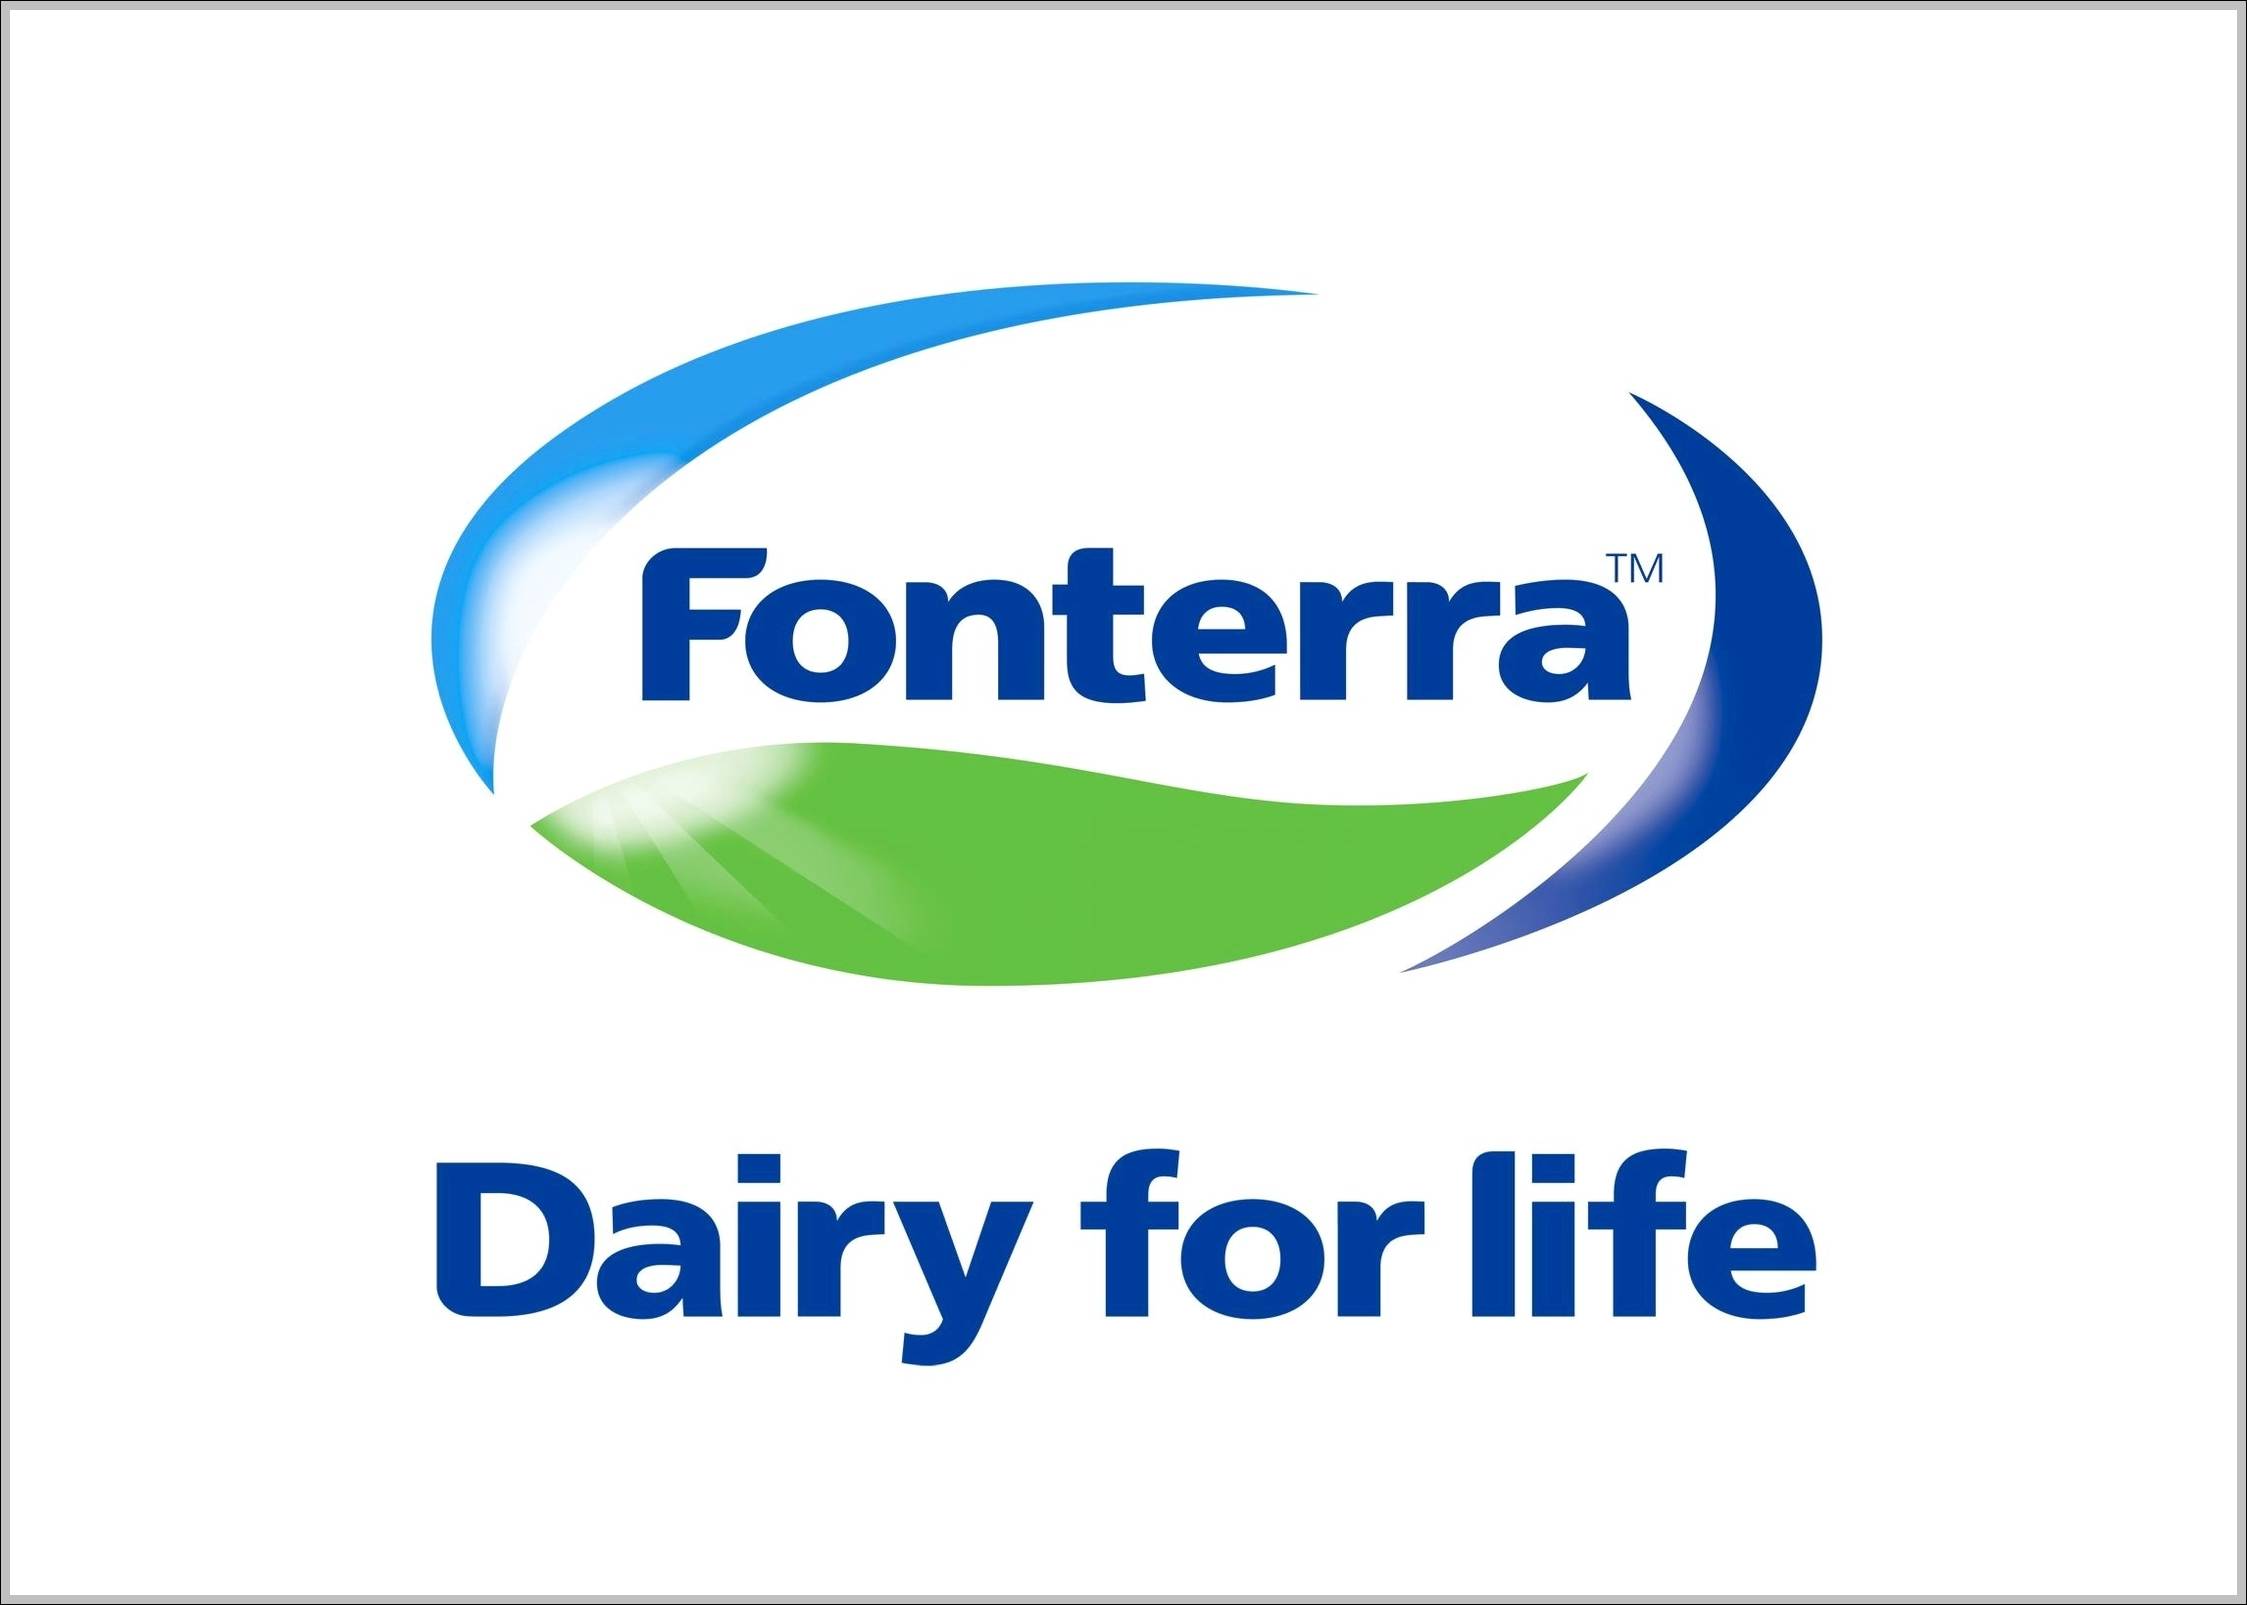 Fonterra logo and slogan